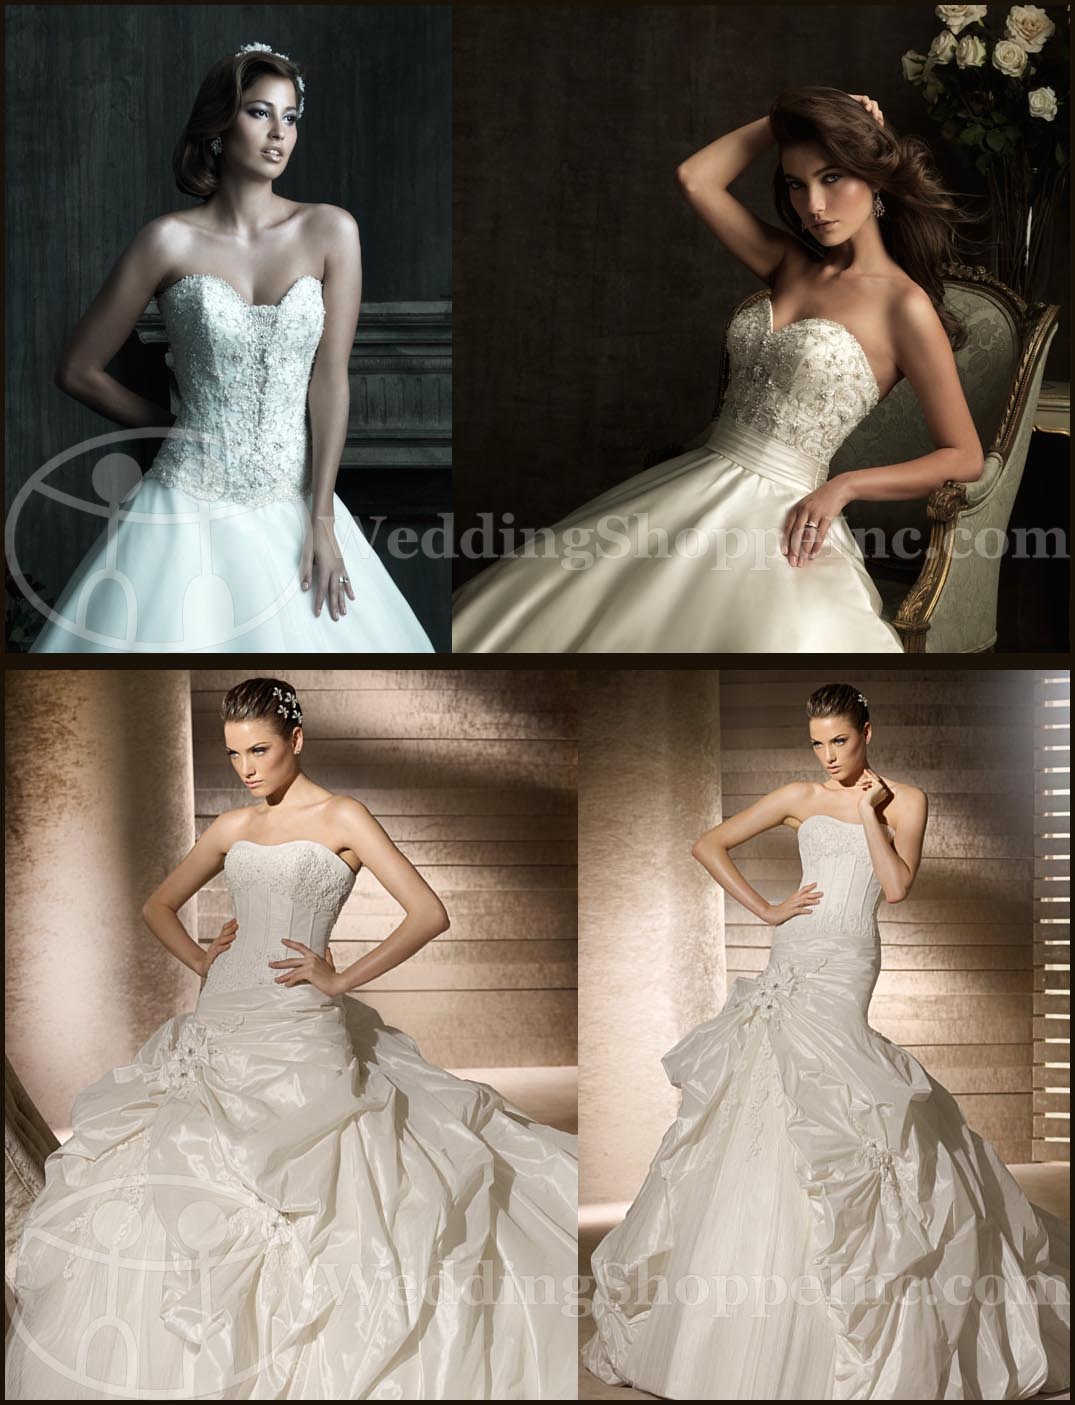 2012 Wedding Trends We Love: Corset Style Wedding Dresses (Part I) – Wedding  Shoppe